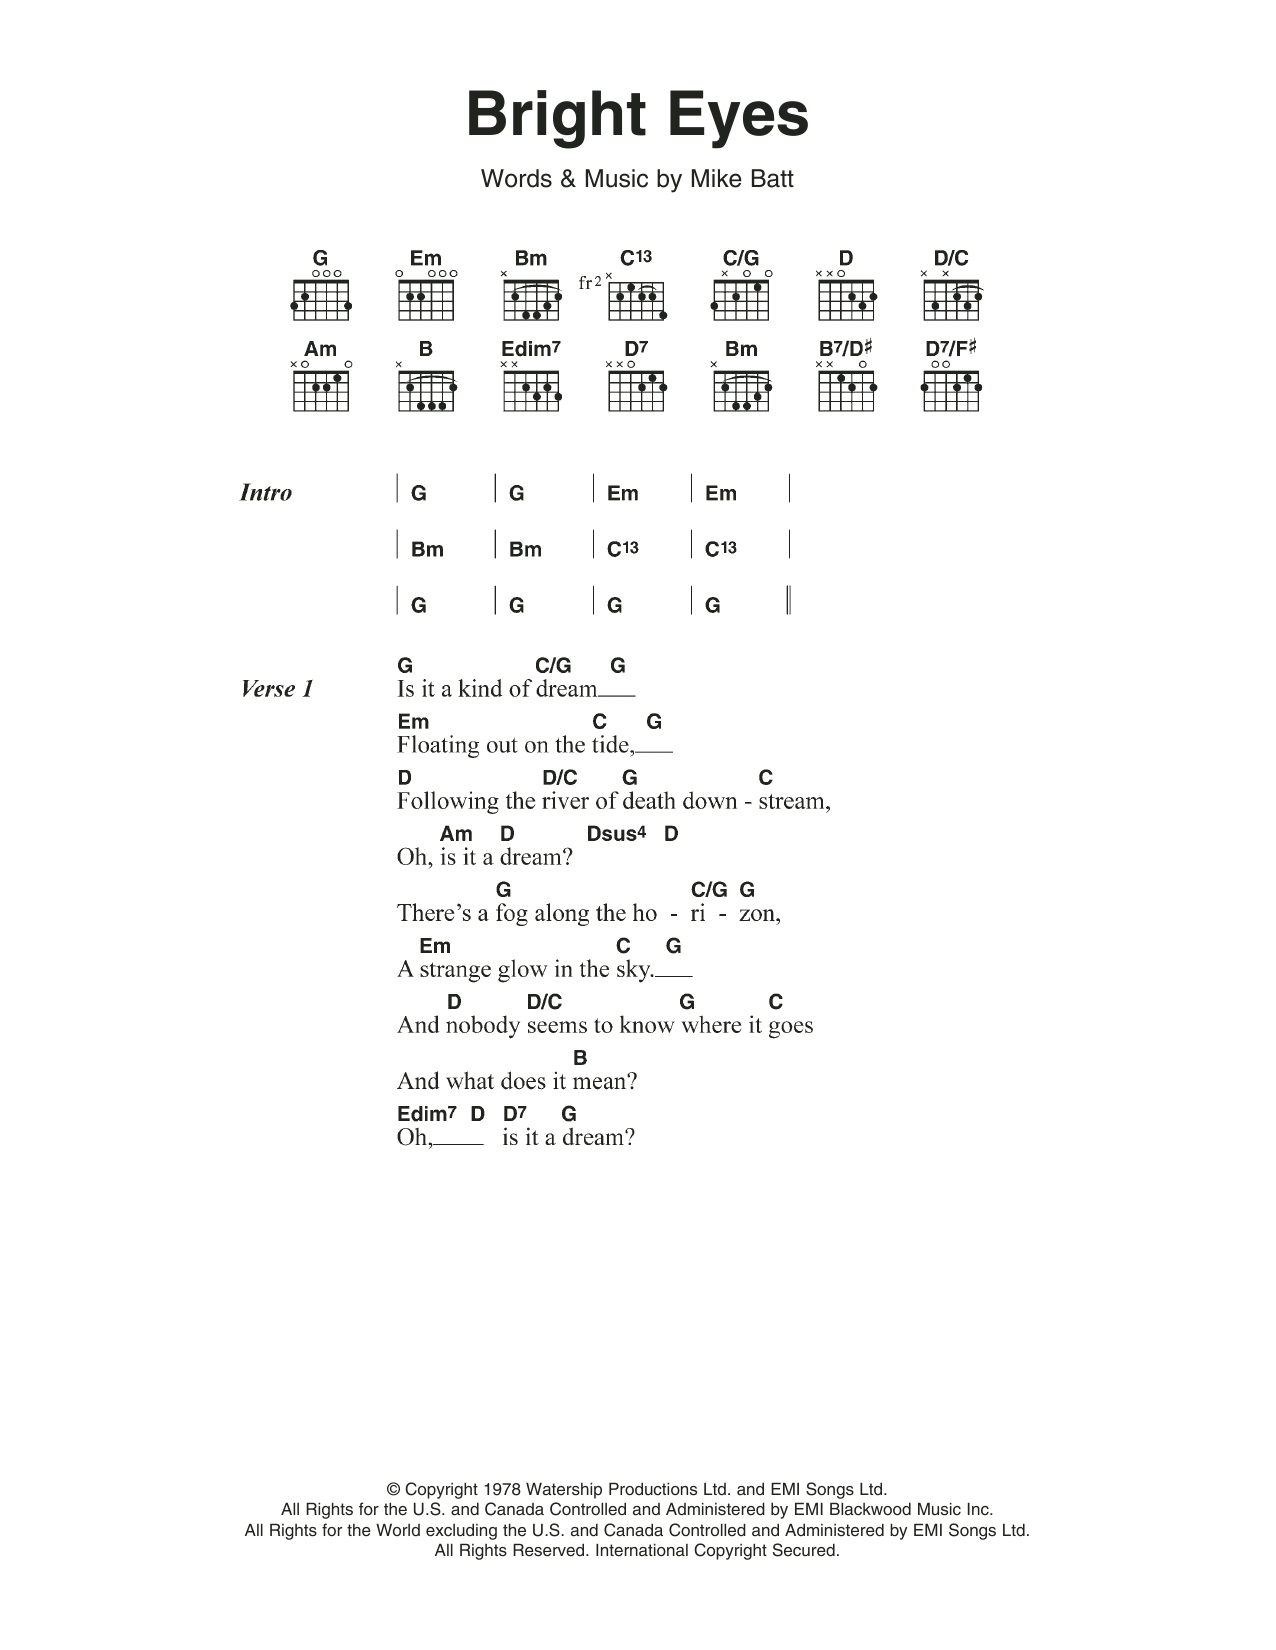 Download Art Garfunkel Bright Eyes Sheet Music and learn how to play Lyrics & Chords PDF digital score in minutes